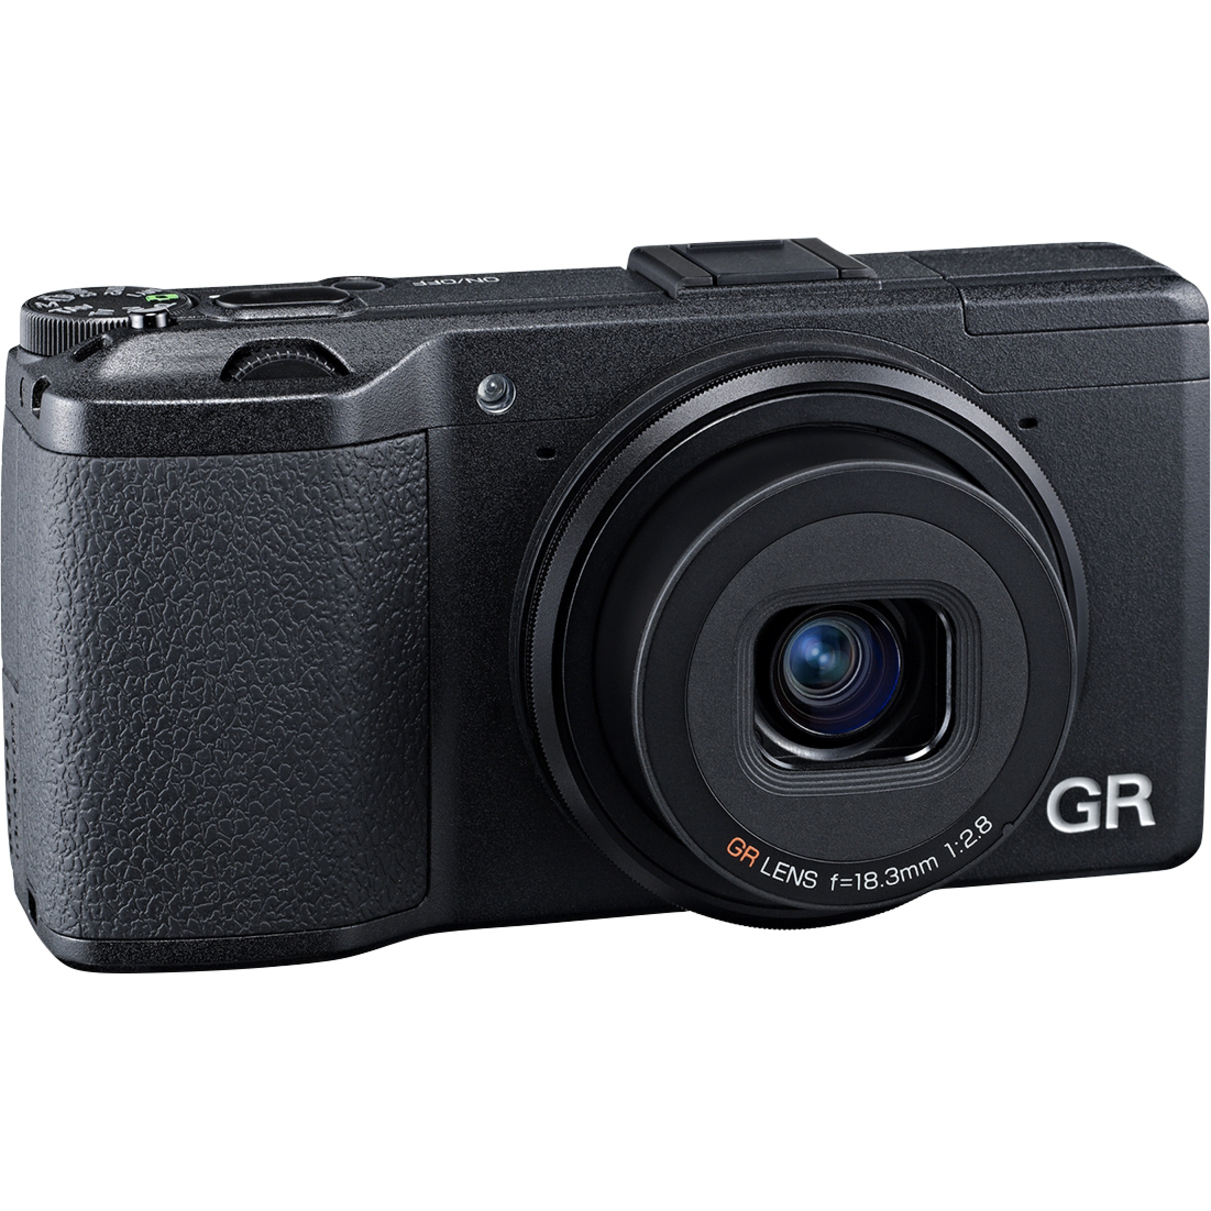 Ricoh GR 16.2 Megapixel Compact Camera, Black - image 5 of 6